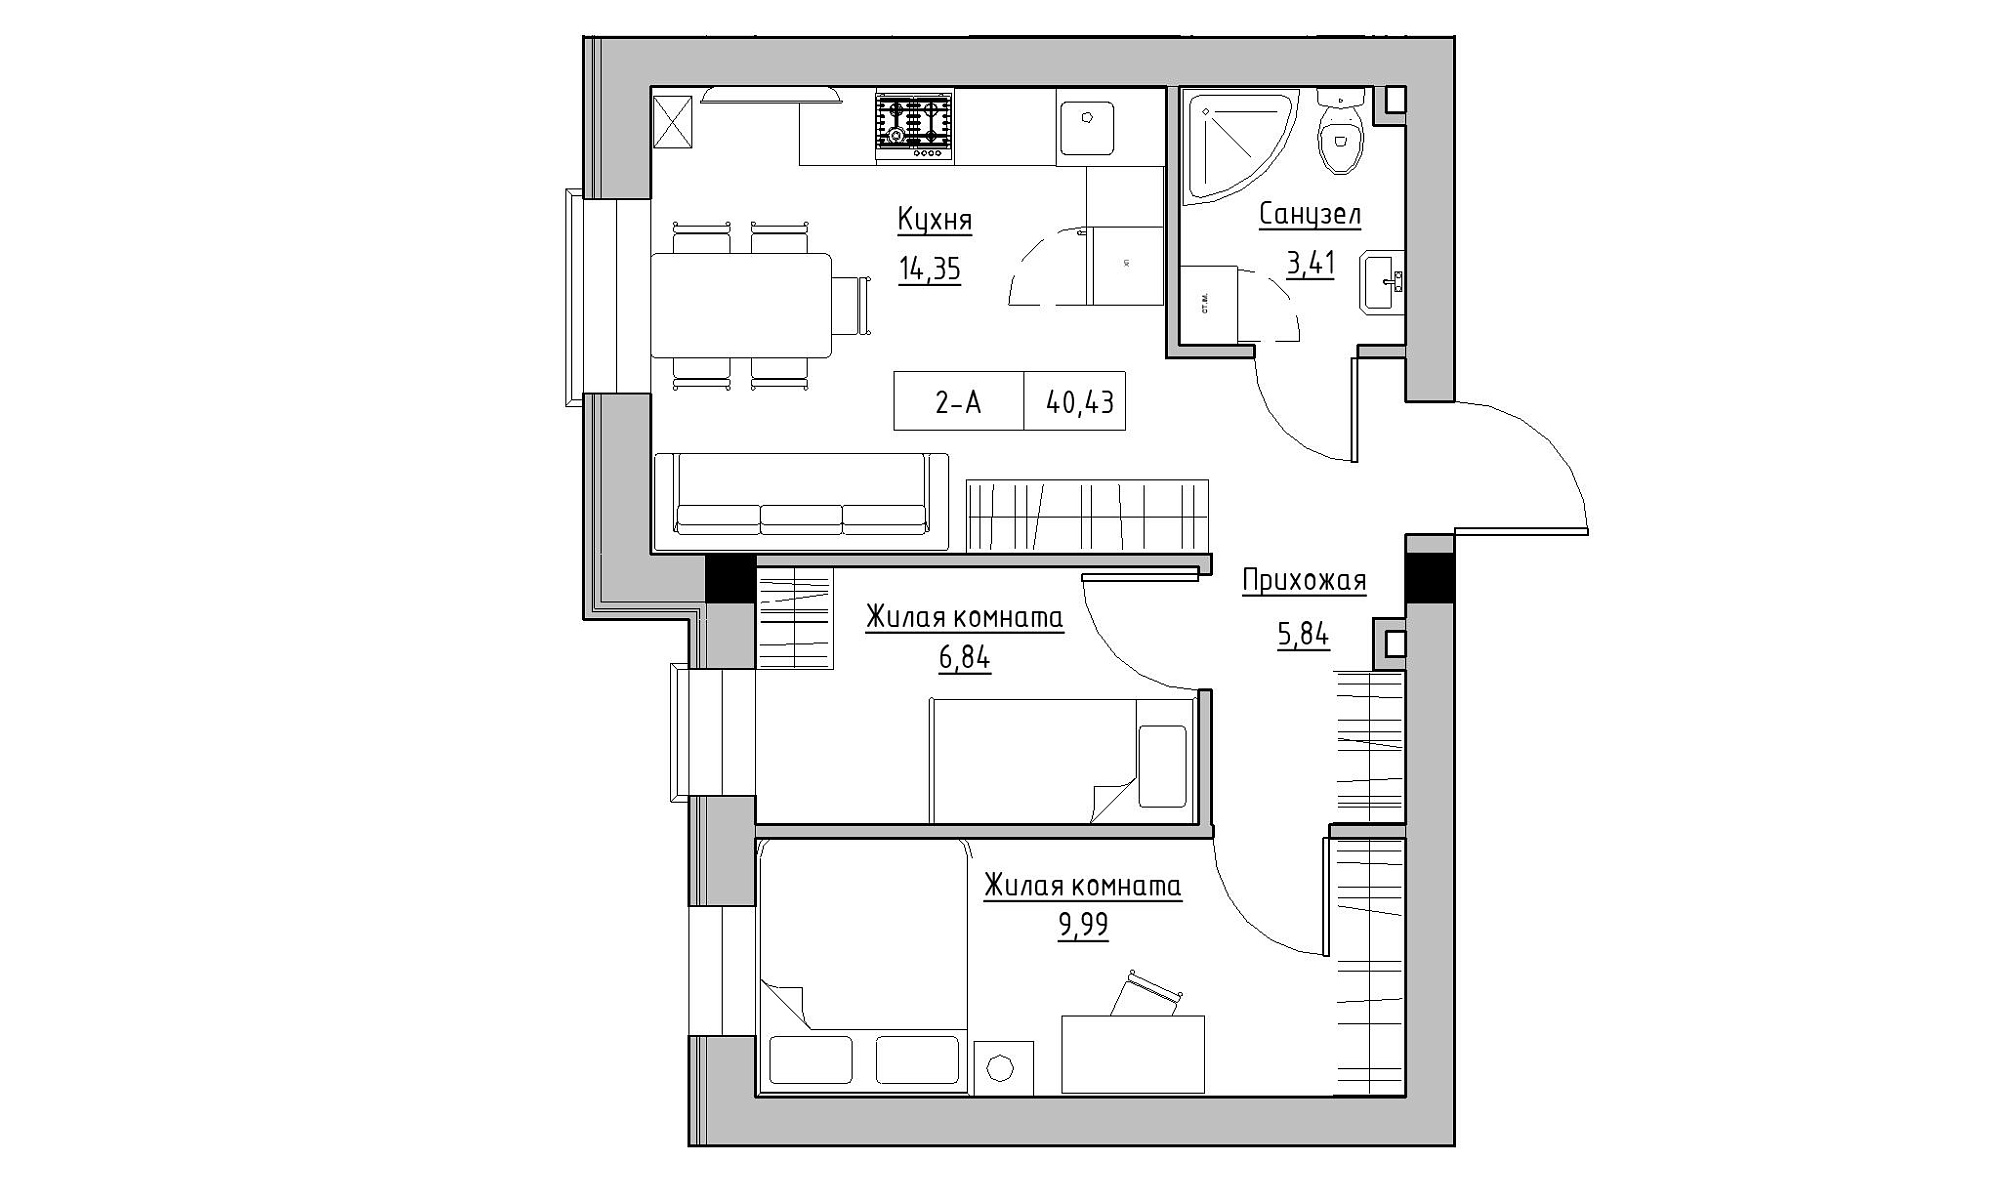 Planning 2-rm flats area 40.43m2, KS-021-01/0004.